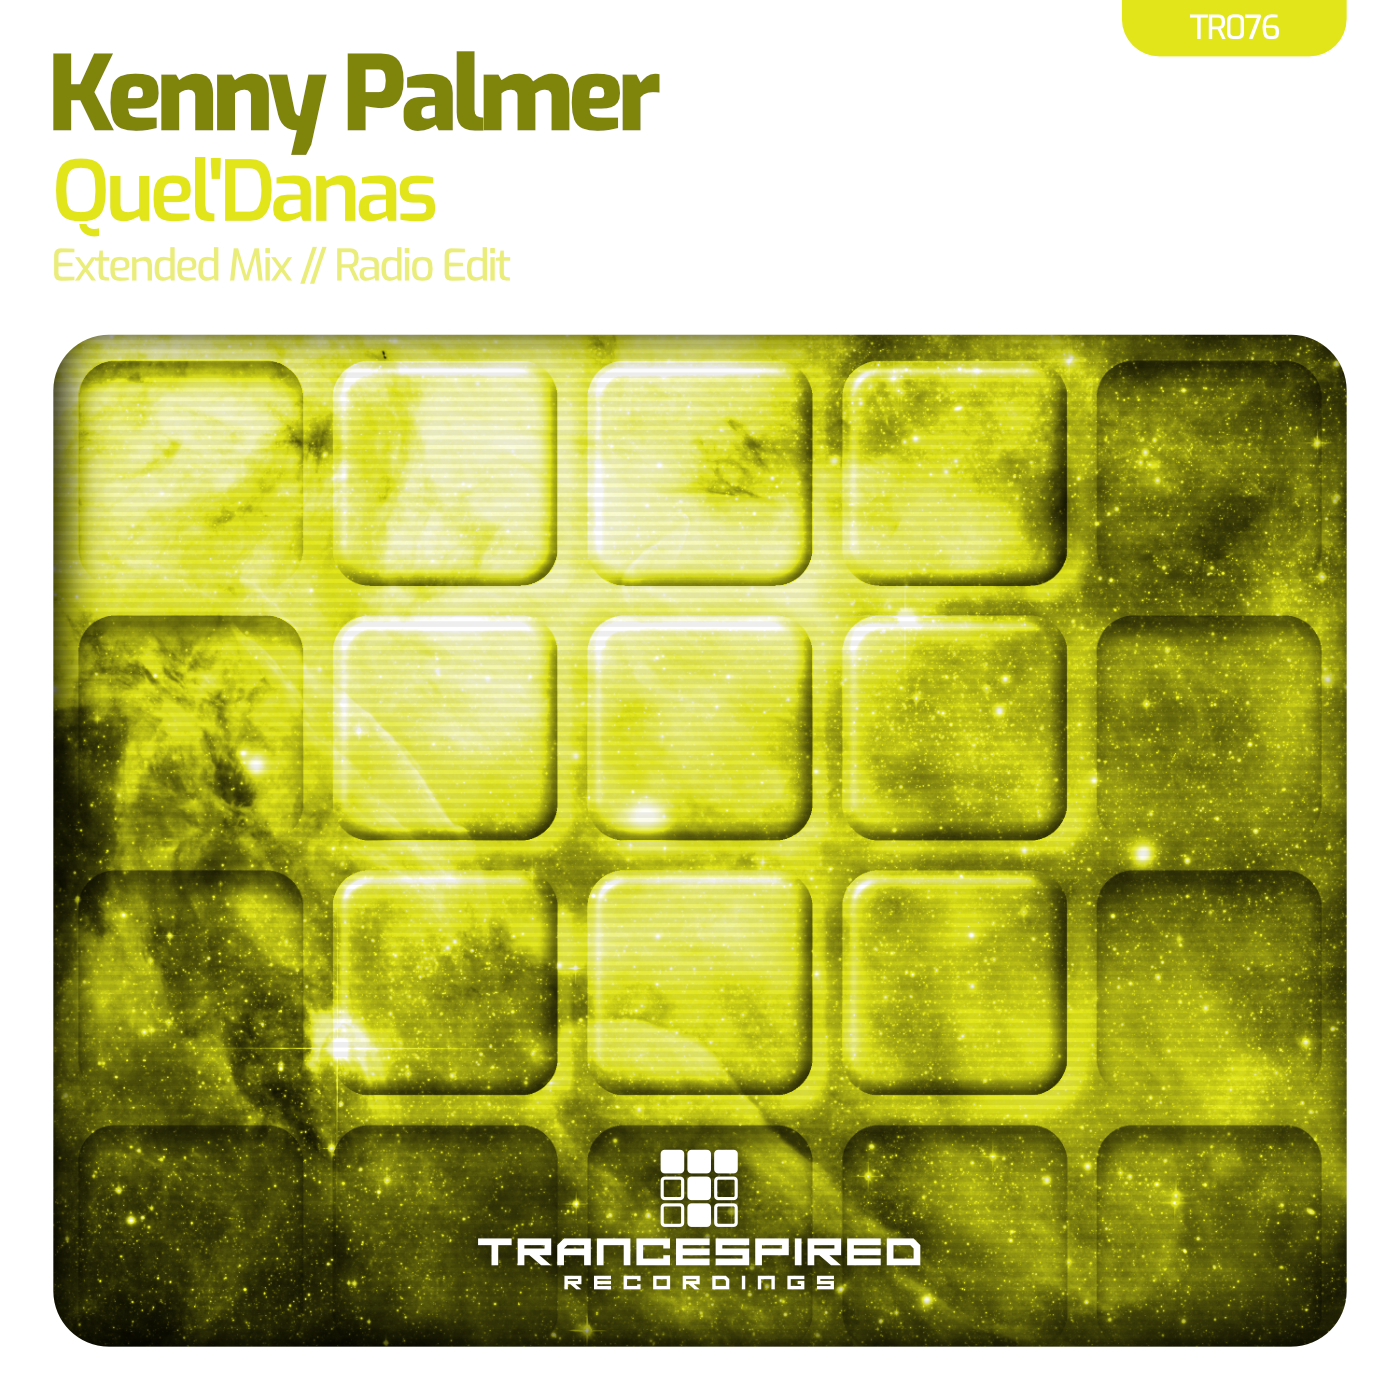 Kenny Palmer presents Quel'Danas on Trancespired Recordings